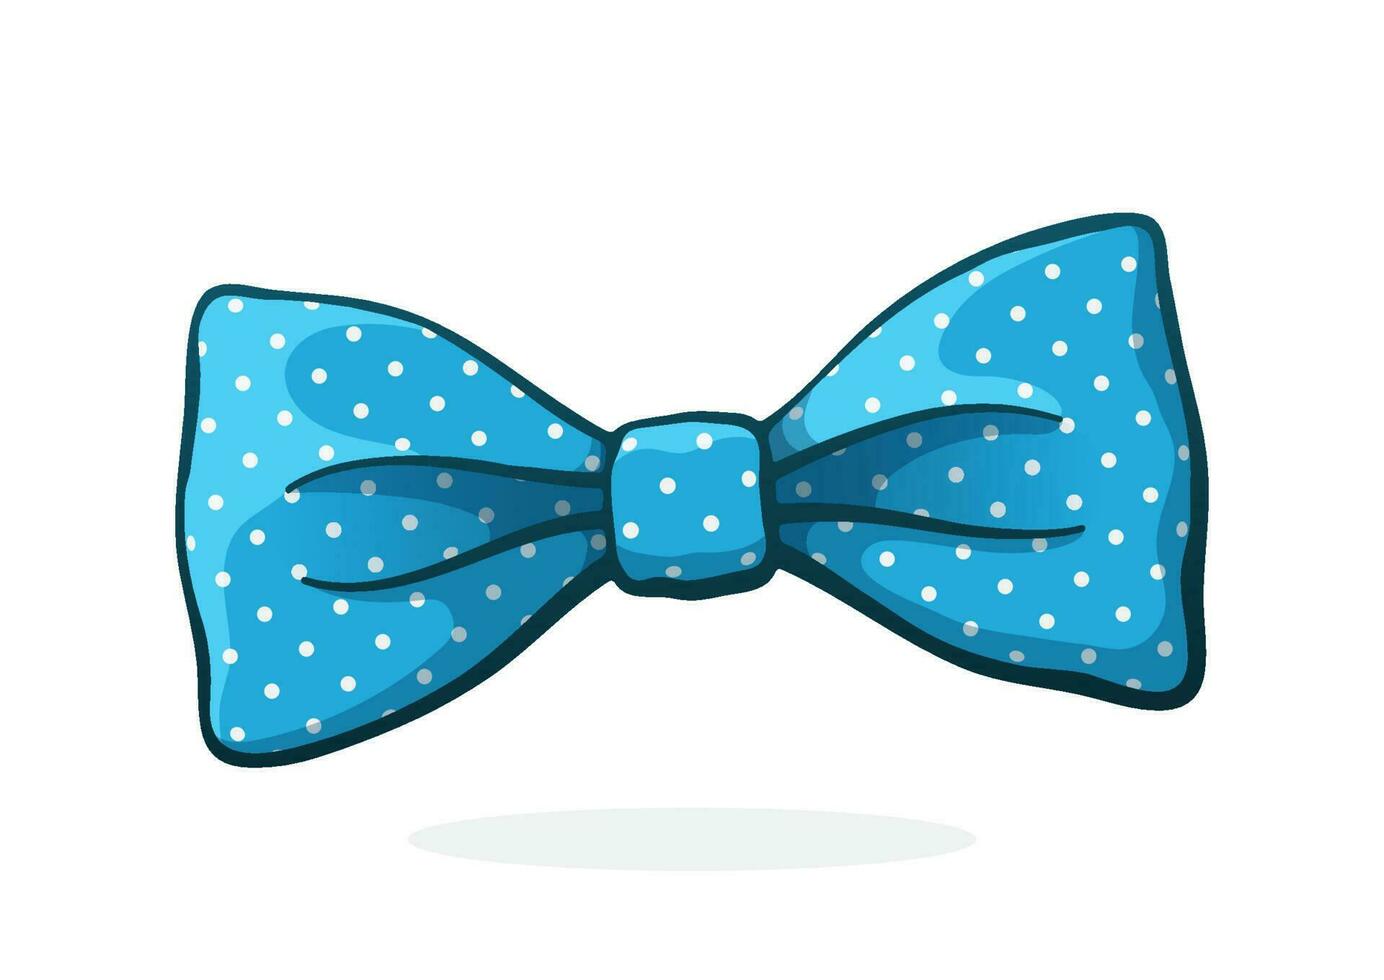 azul arco Corbata con impresión un polca puntos mano dibujado impresión con contorno. Clásico elegante corbata de moño. de los hombres ropa accesorios vector